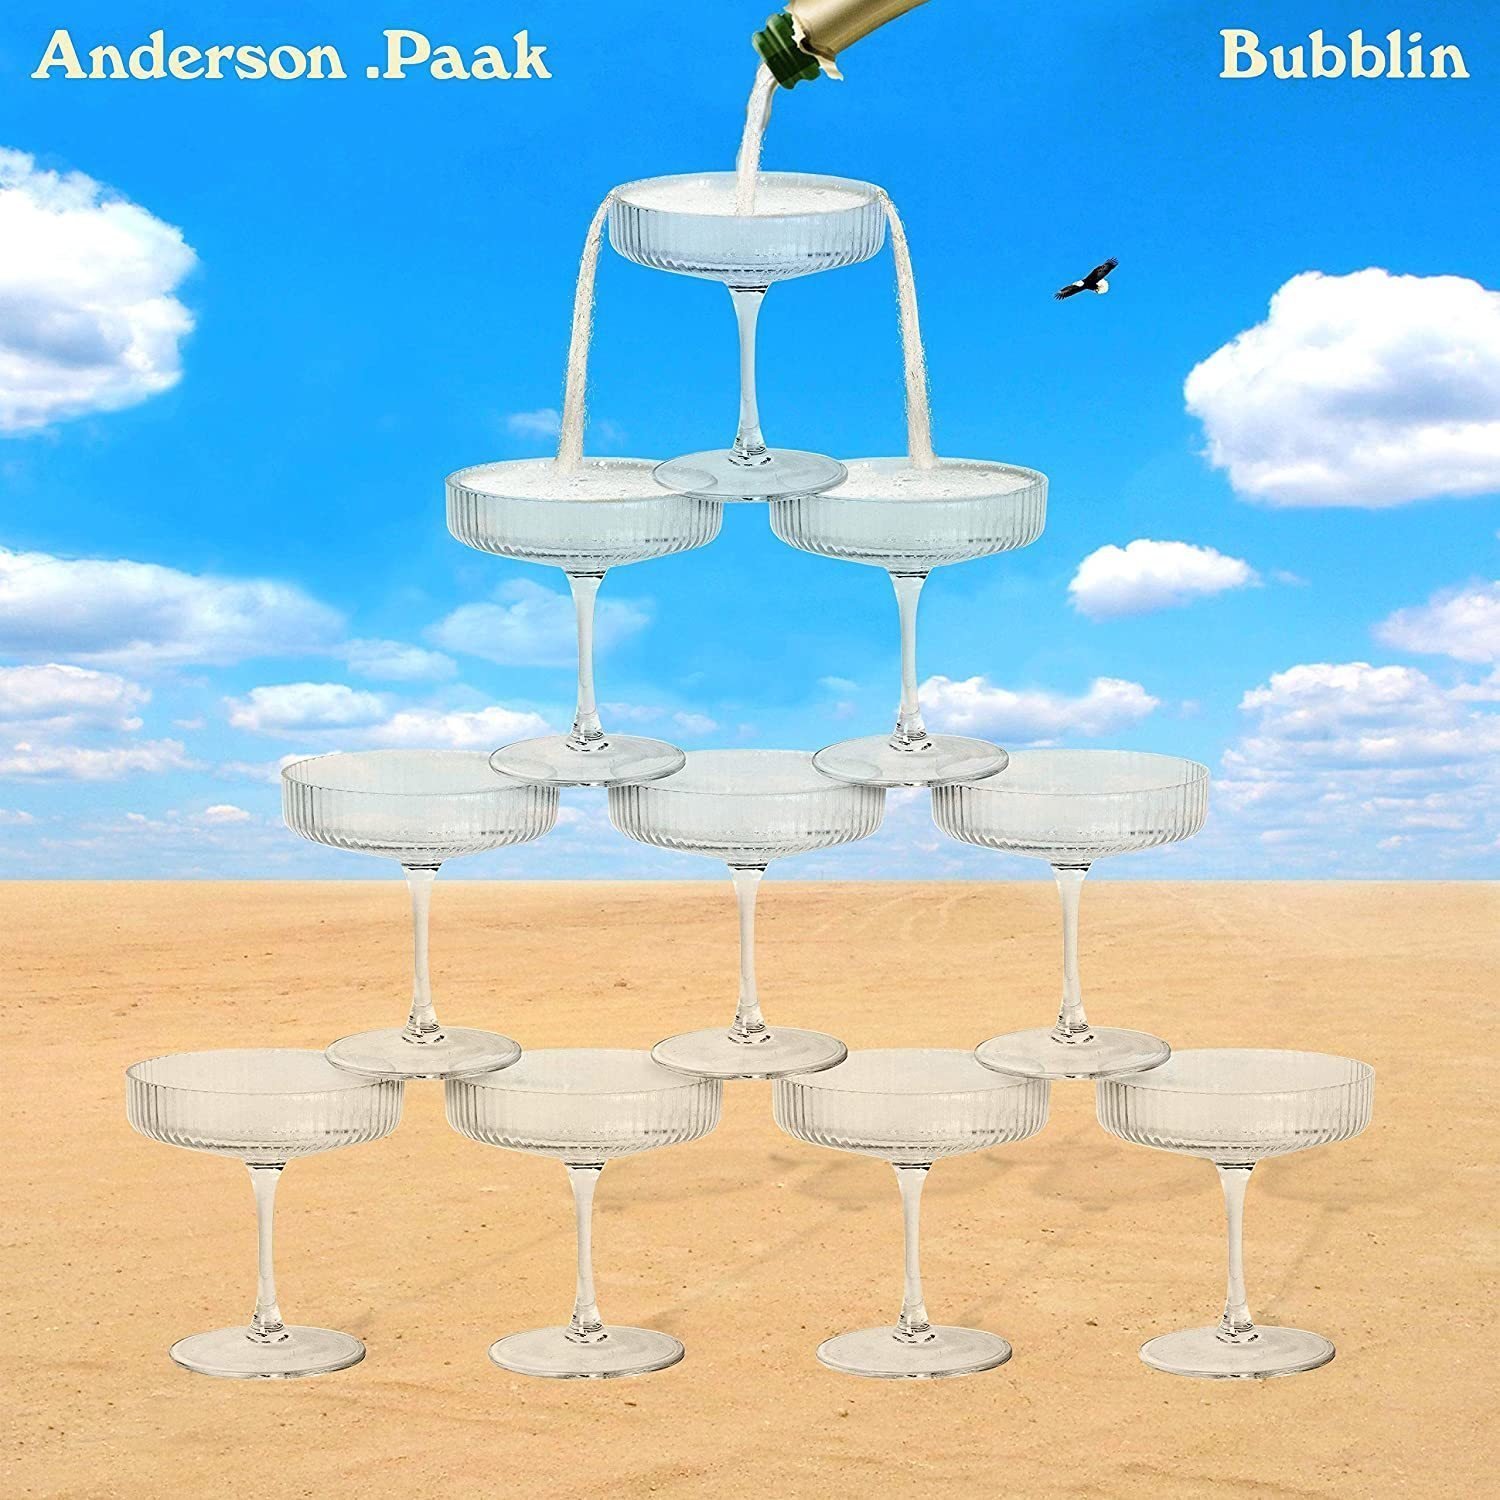 Vinyl Record Anderson Paak - RSD - Bubblin (LP)